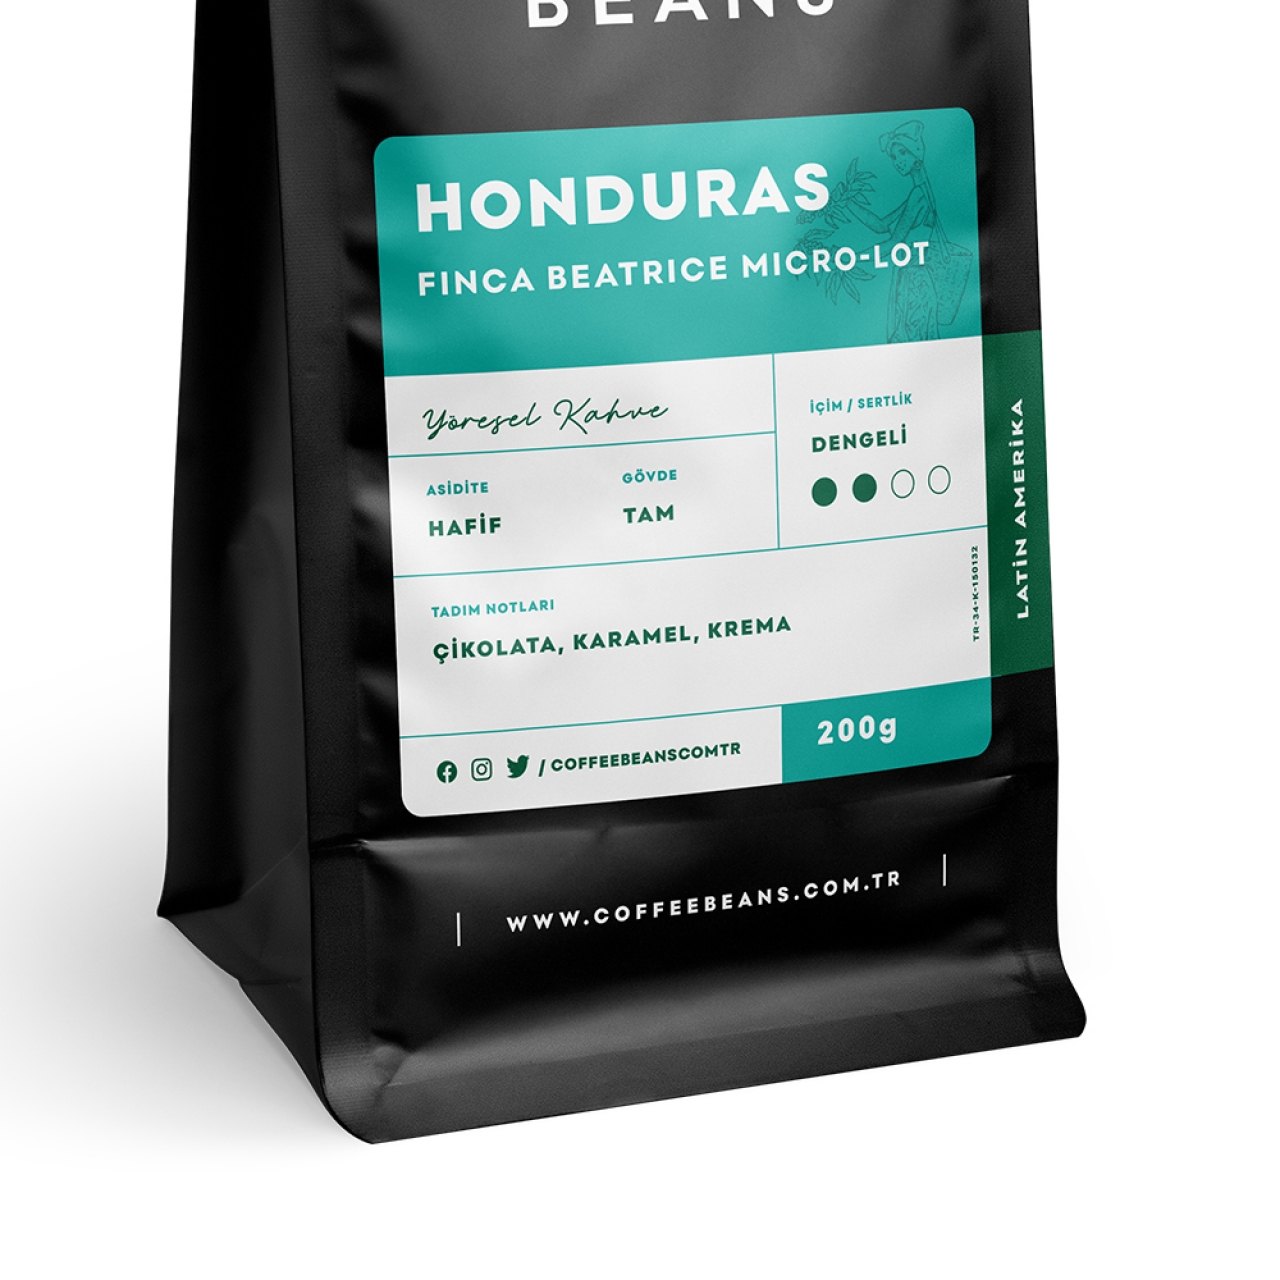 Honduras Finca Beatrice Micro-Lot Filtre Kahve Çekirdeği